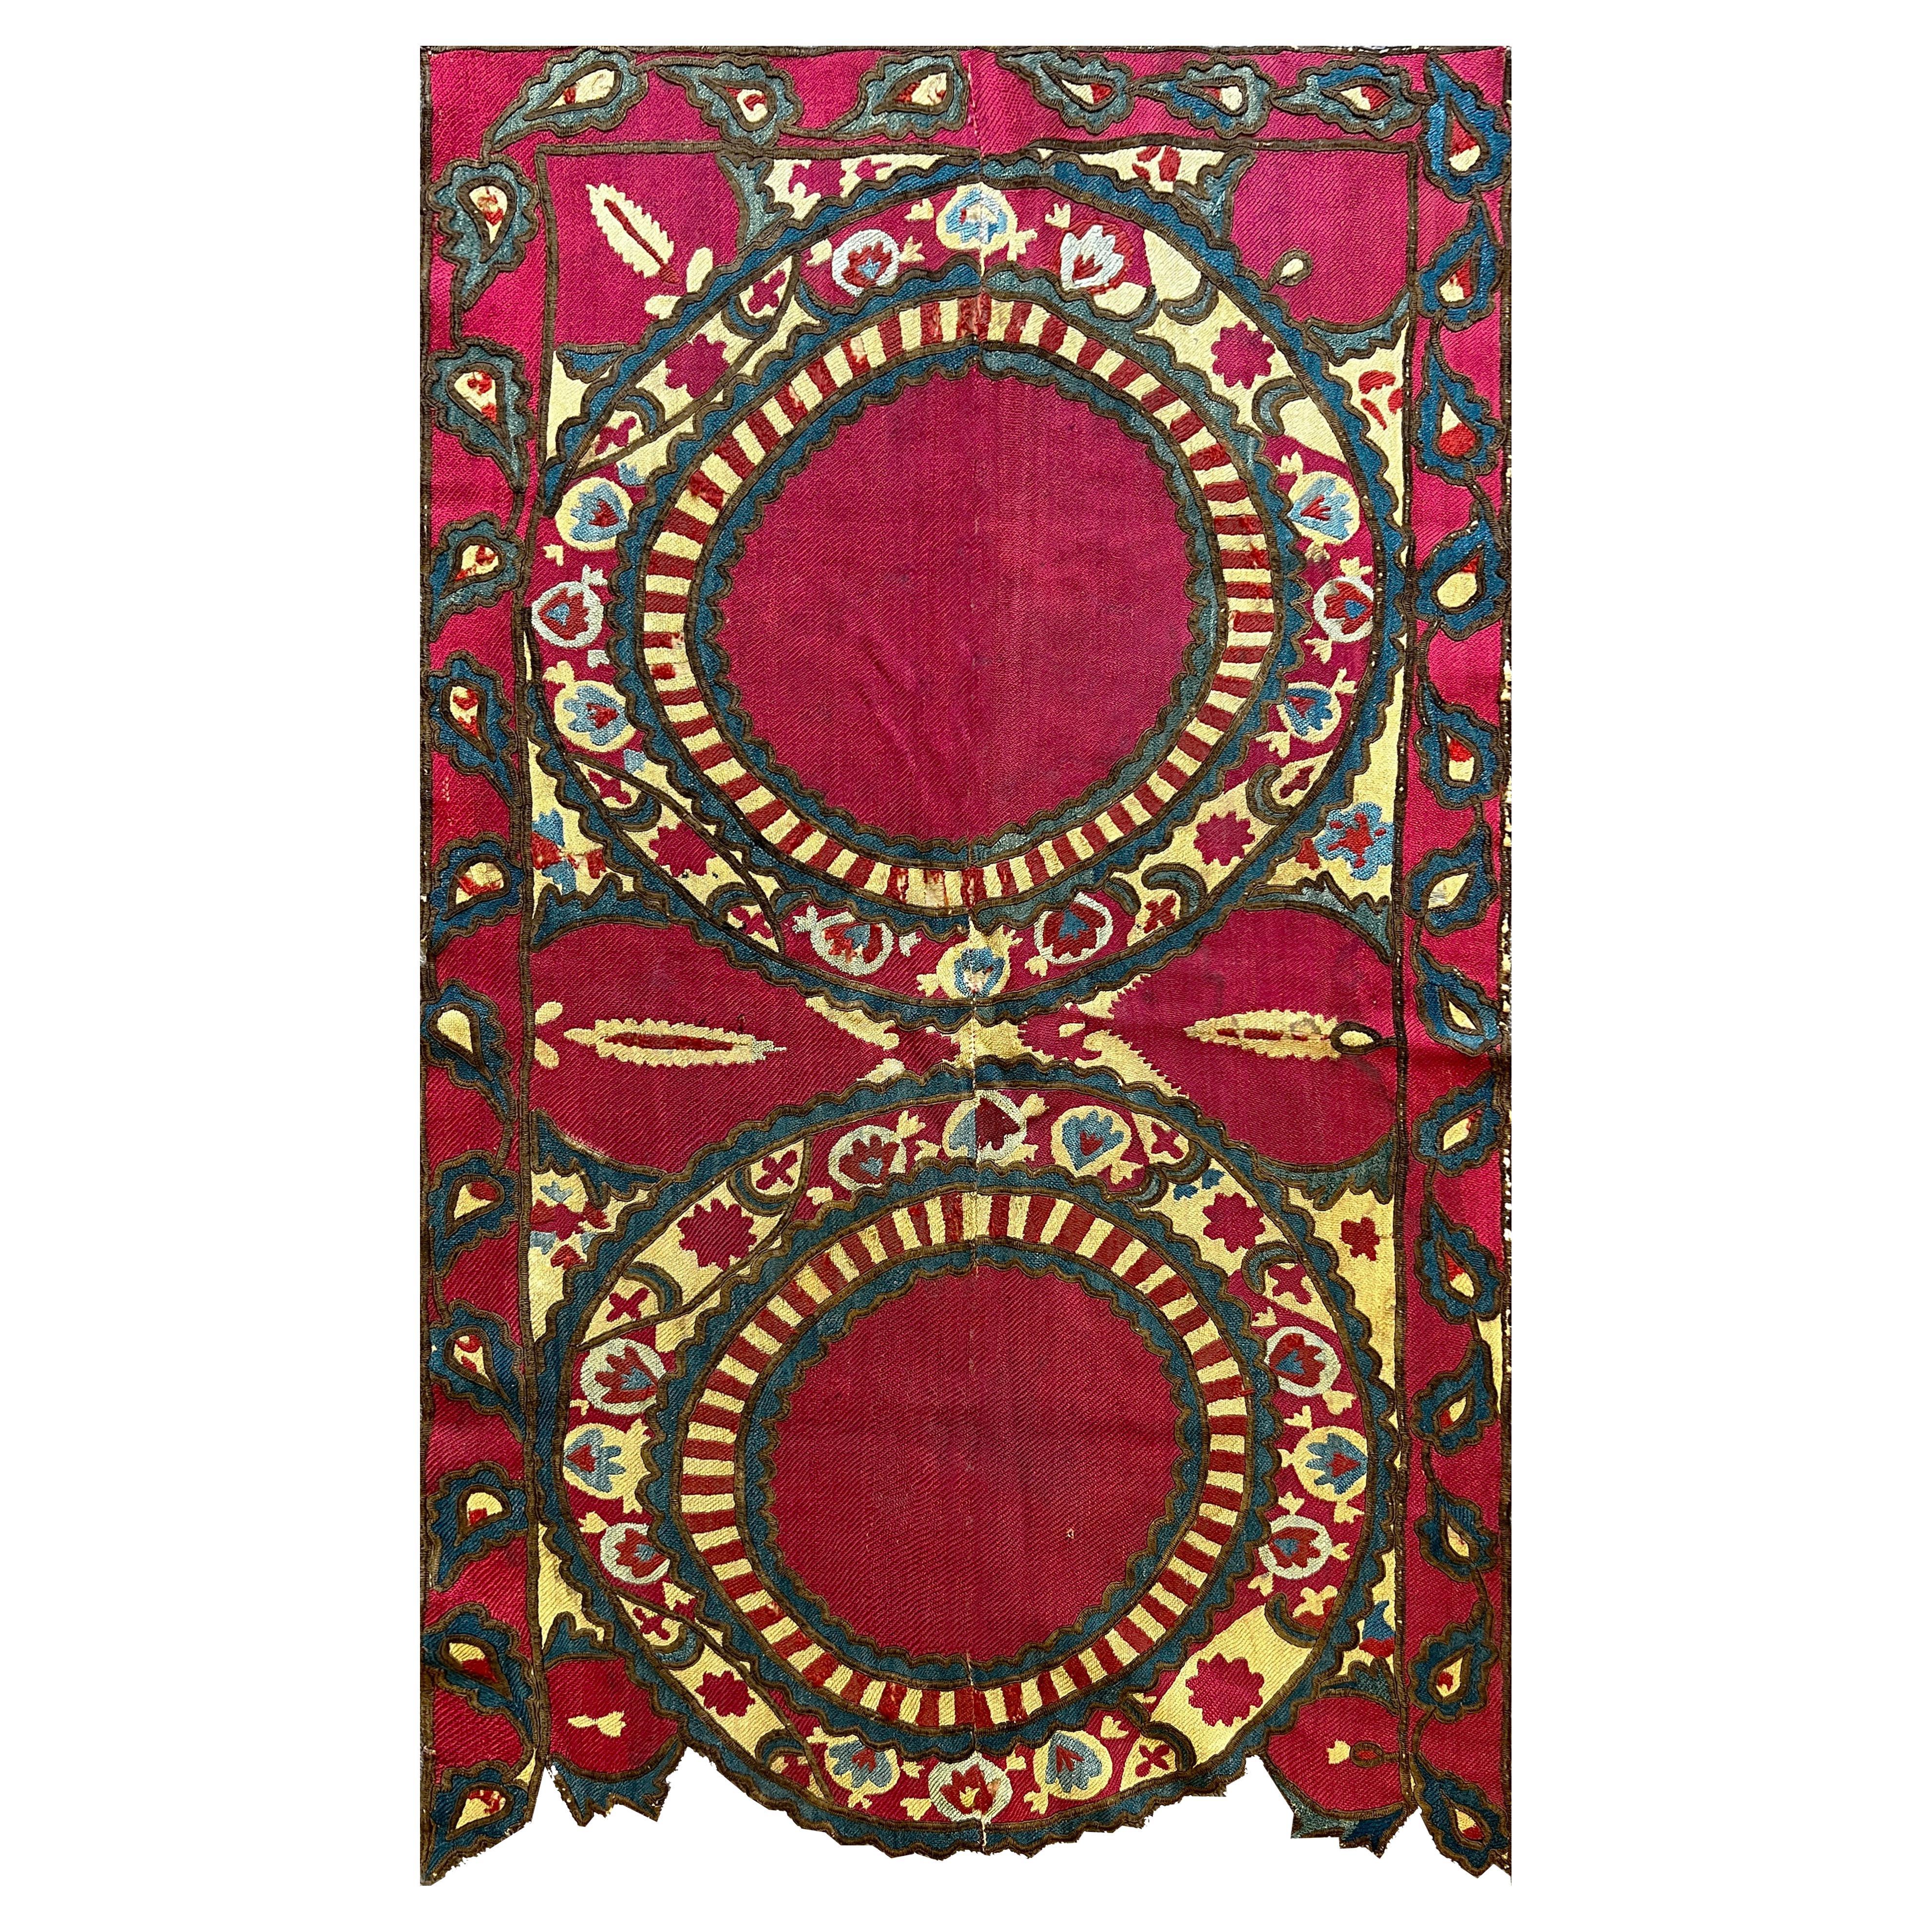  19th Century Textile Uzbekistan 'Tashkent' - N° 719 For Sale